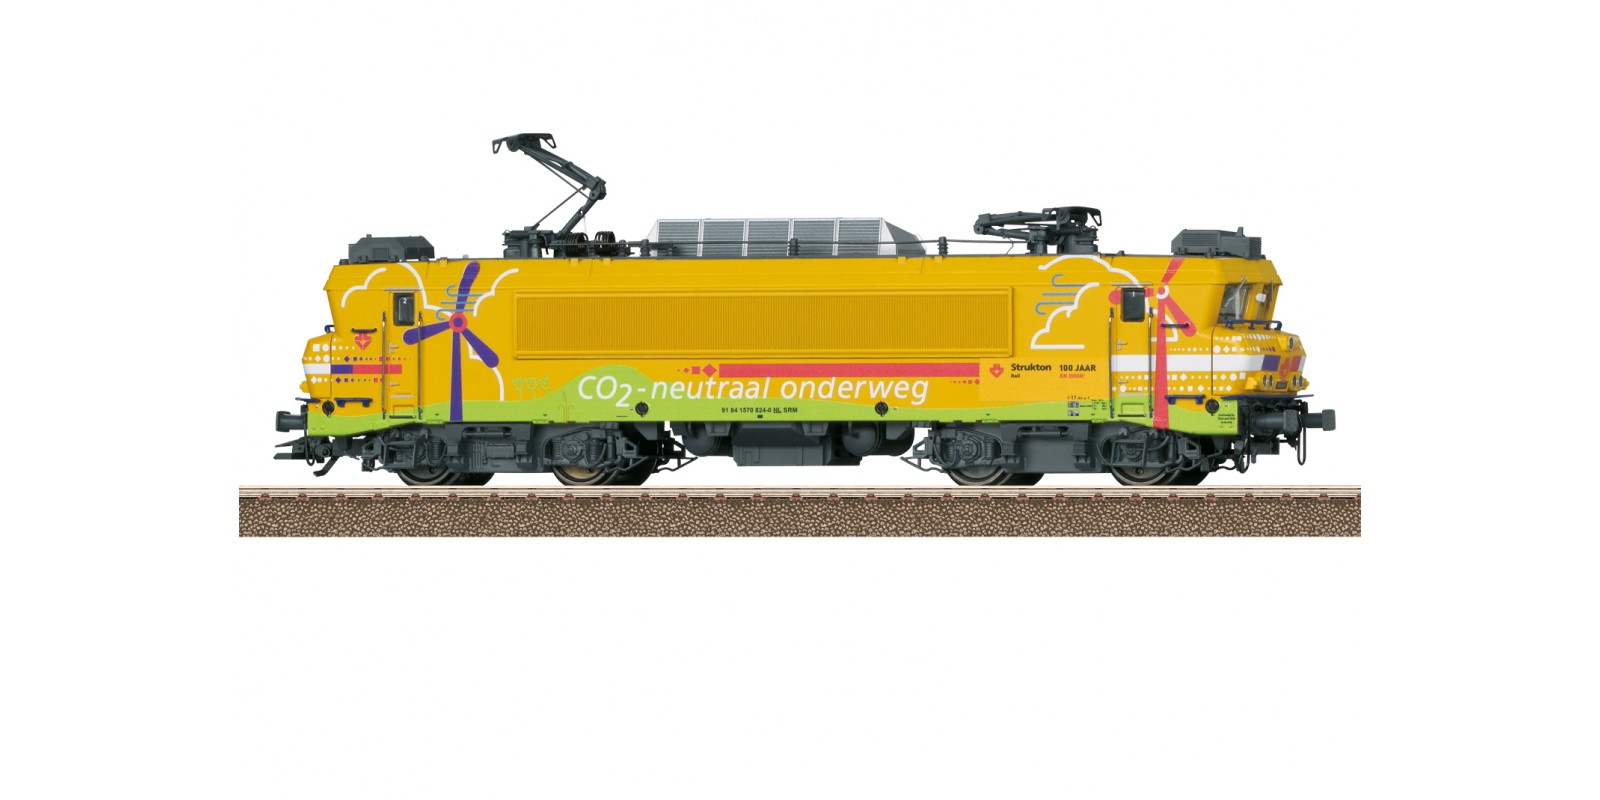 T25161 Class 1800 Electric Locomotive